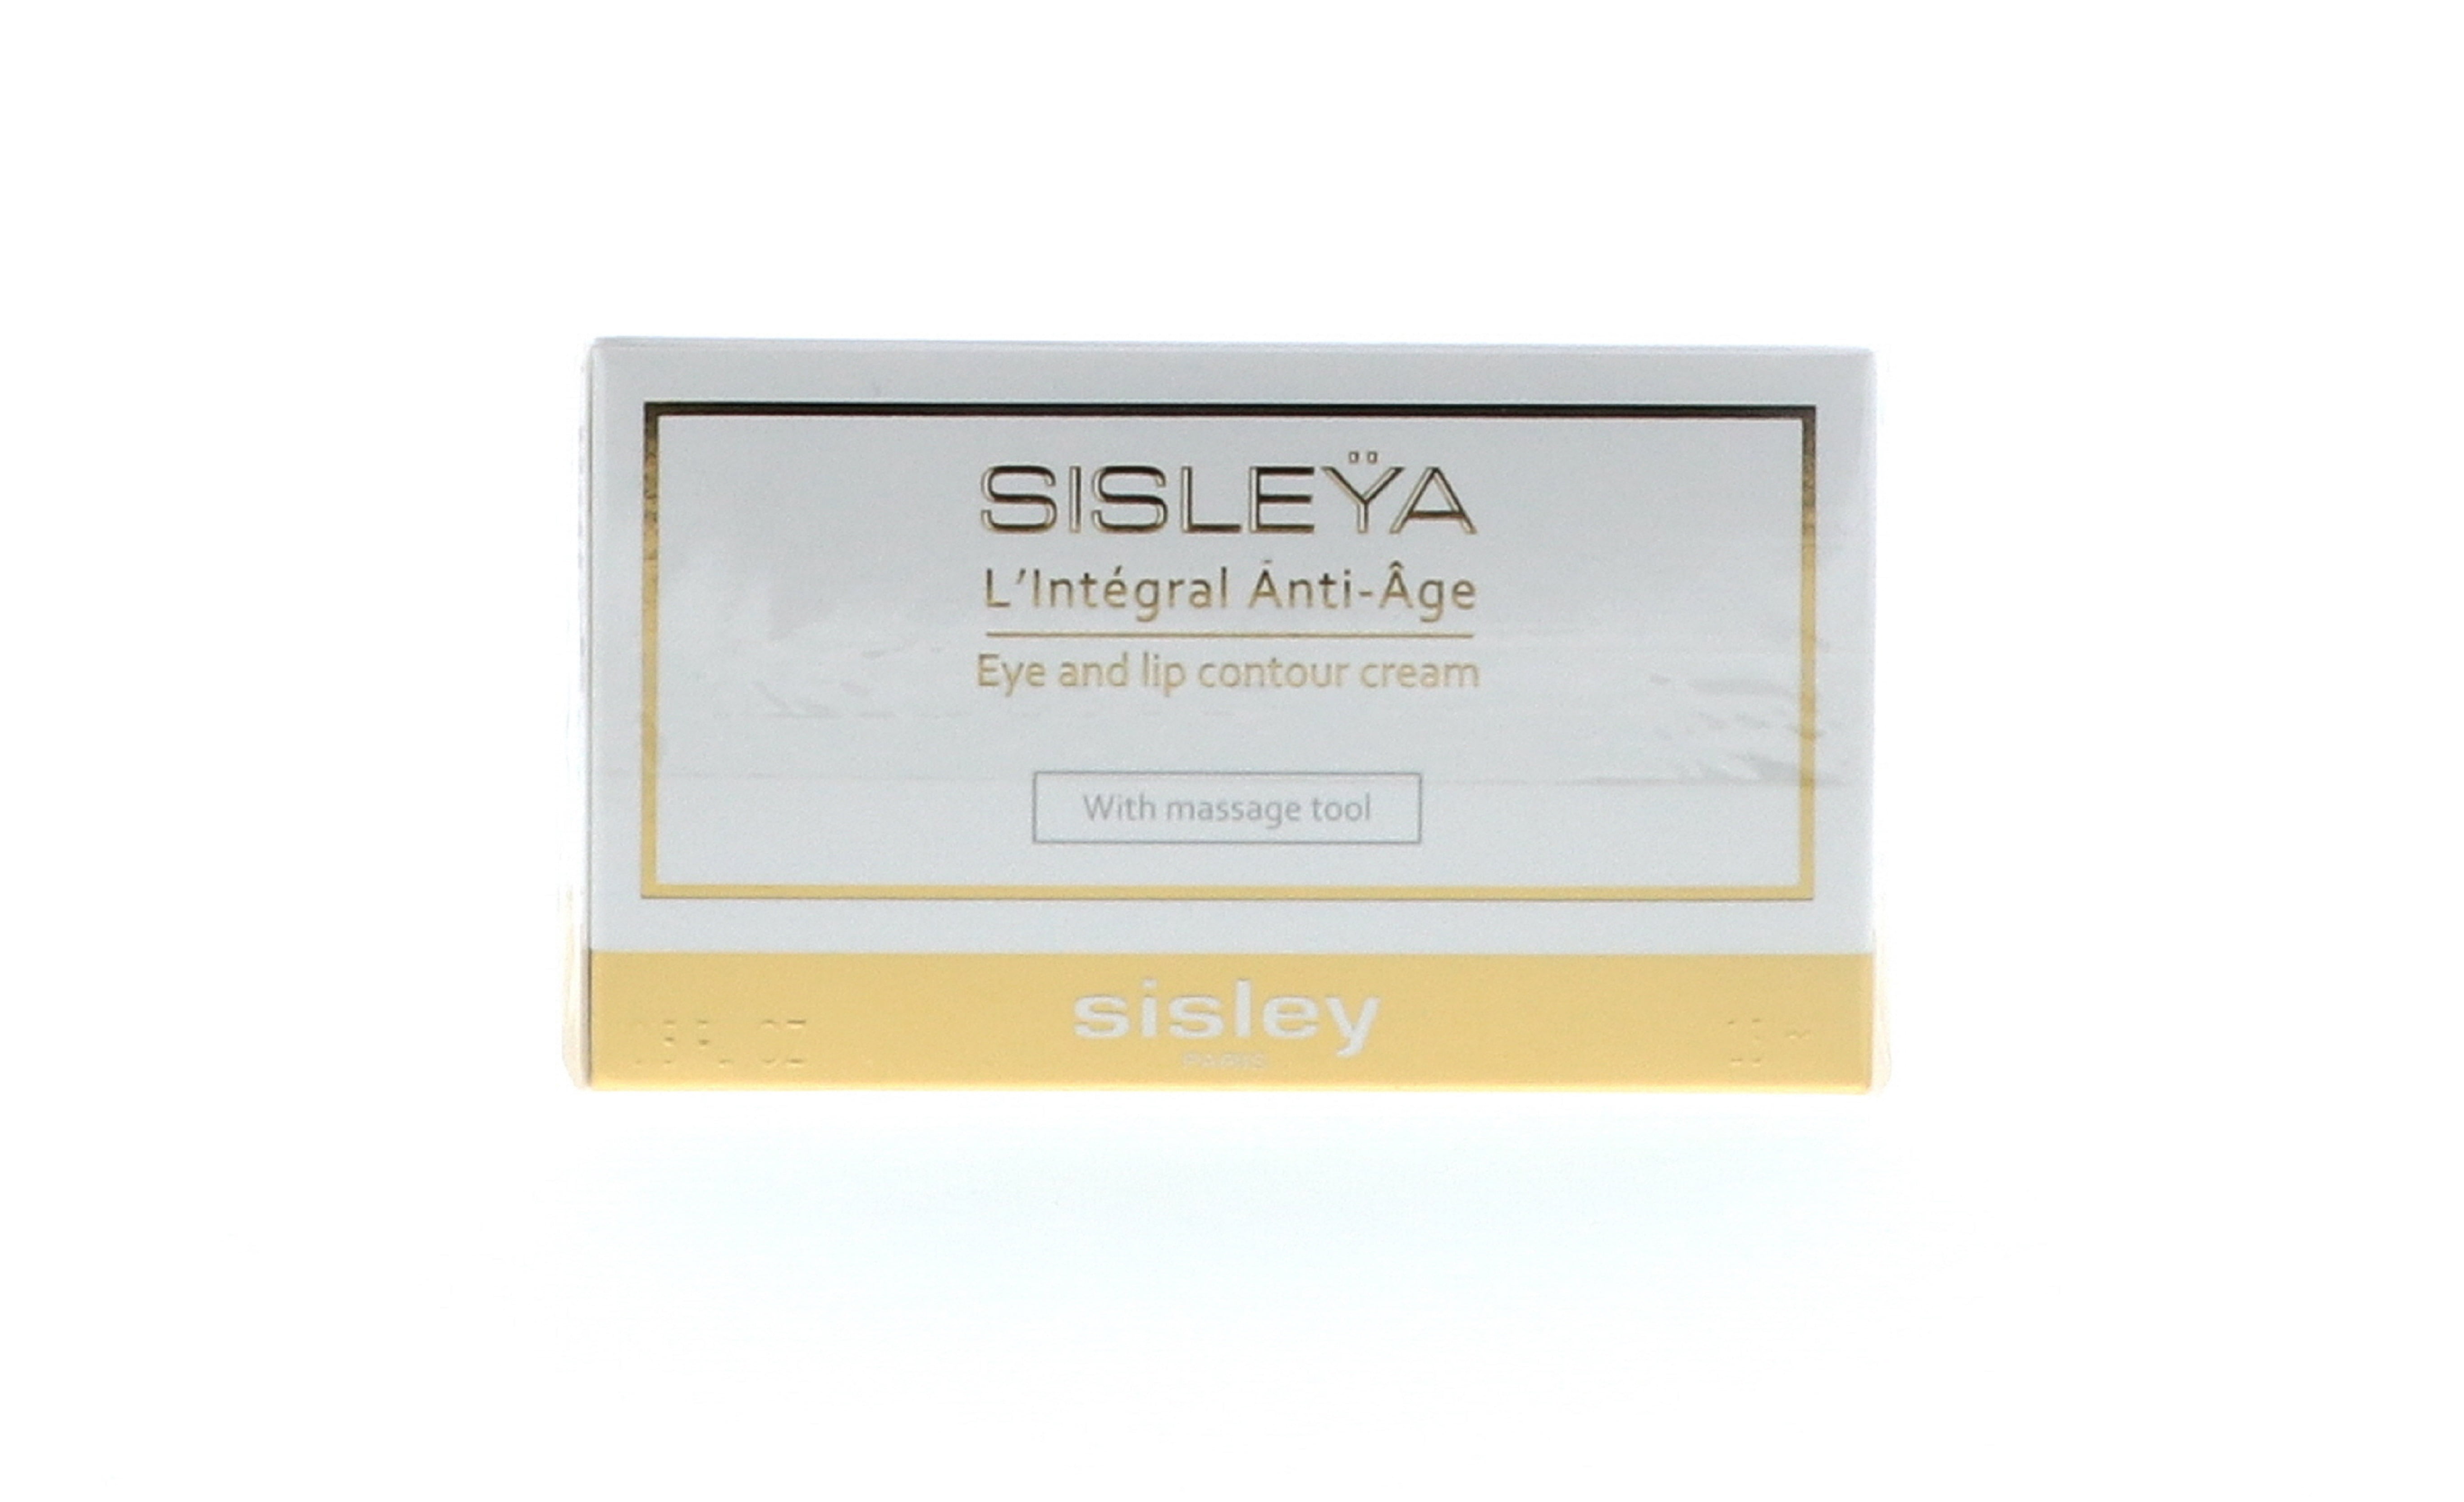 Sisley Sisleya L'Integral Anti-Age Eye and Lip Contour Cream, 0.5 oz